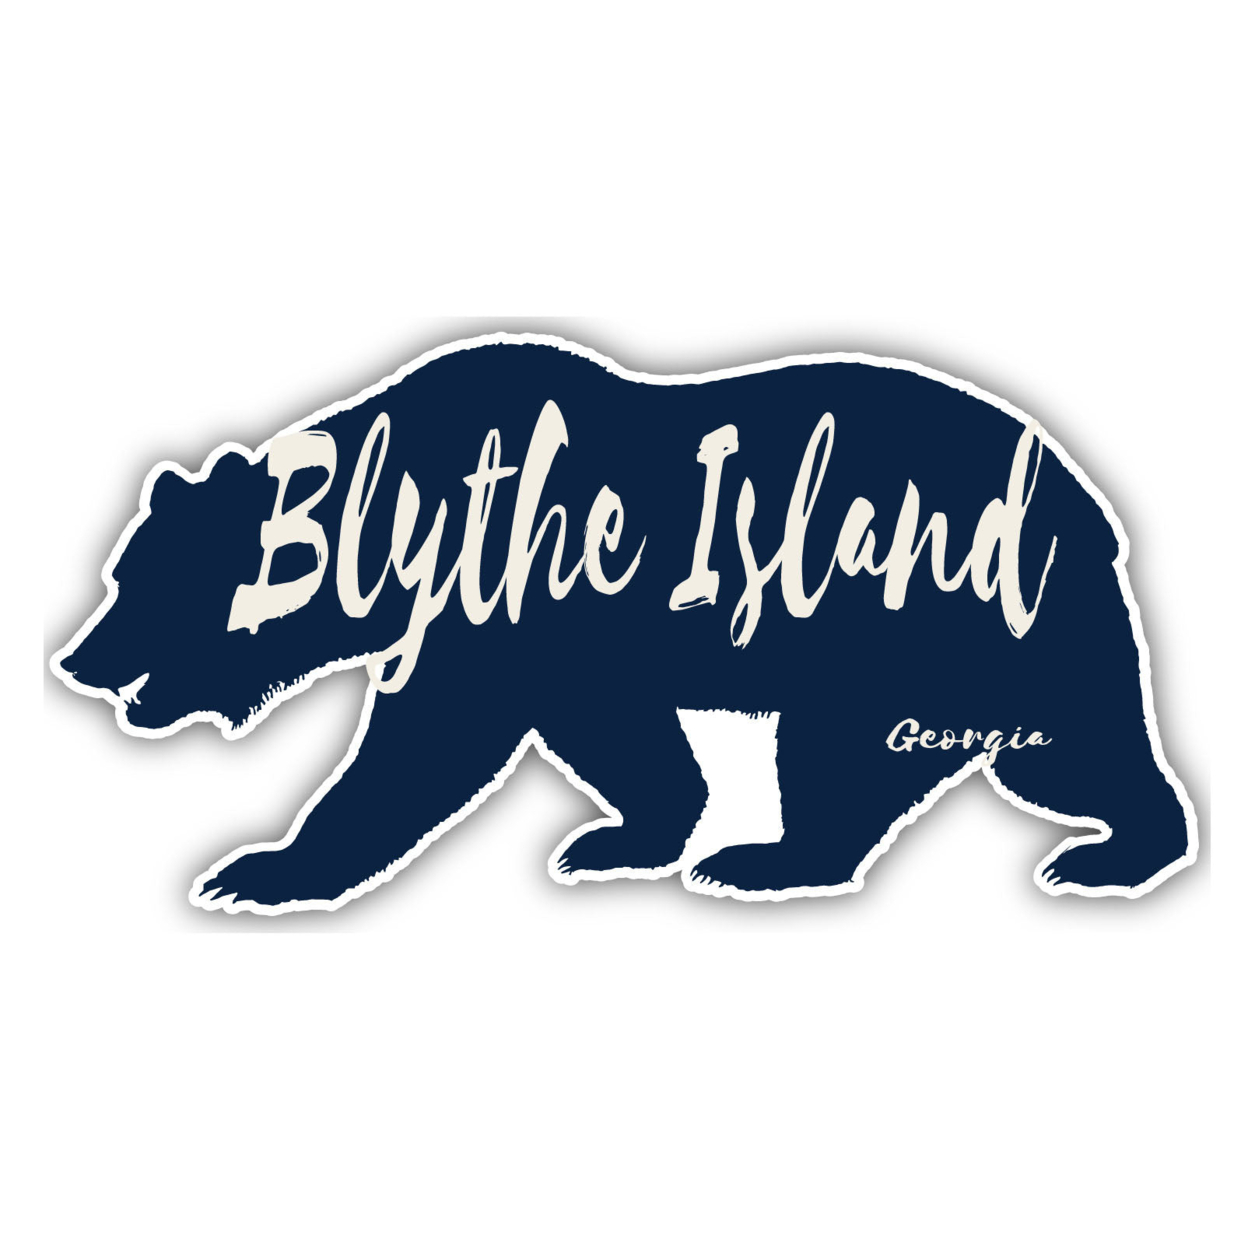 Blythe Island Georgia Souvenir Decorative Stickers (Choose Theme And Size) - 4-Pack, 6-Inch, Bear